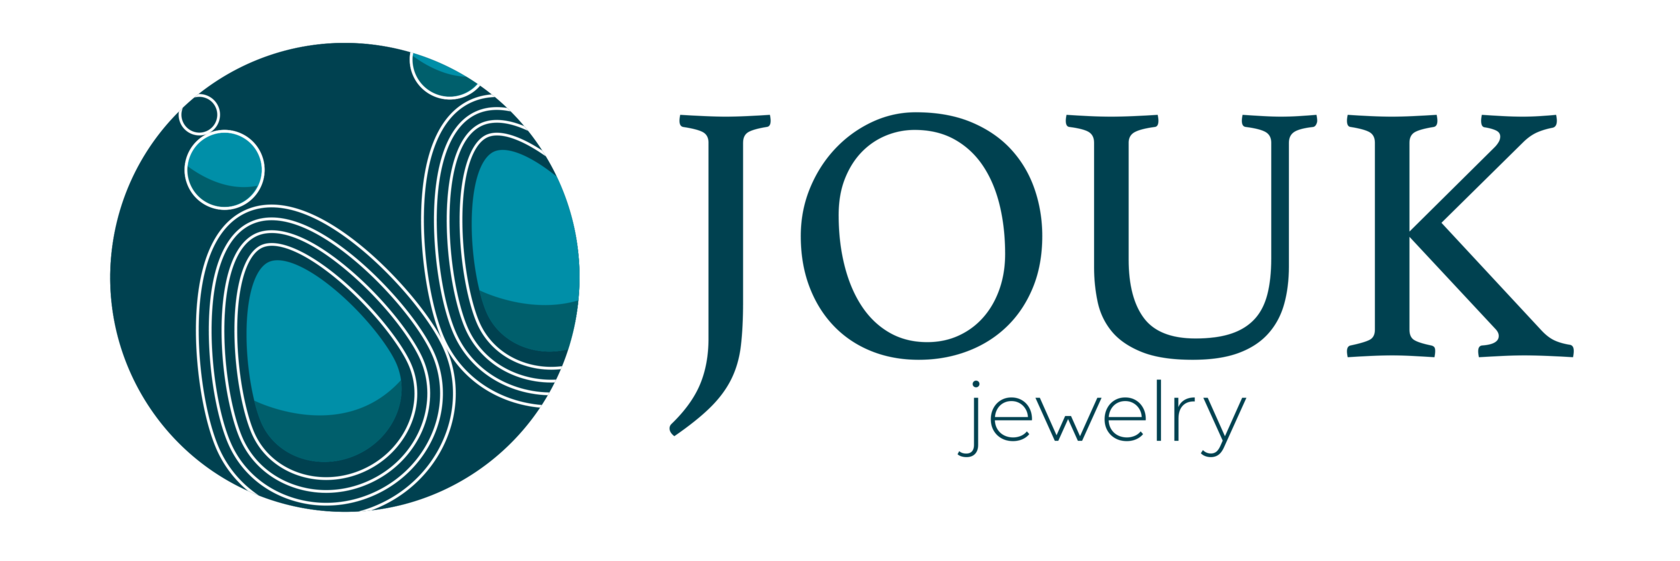 Jouk Jewelry Logo